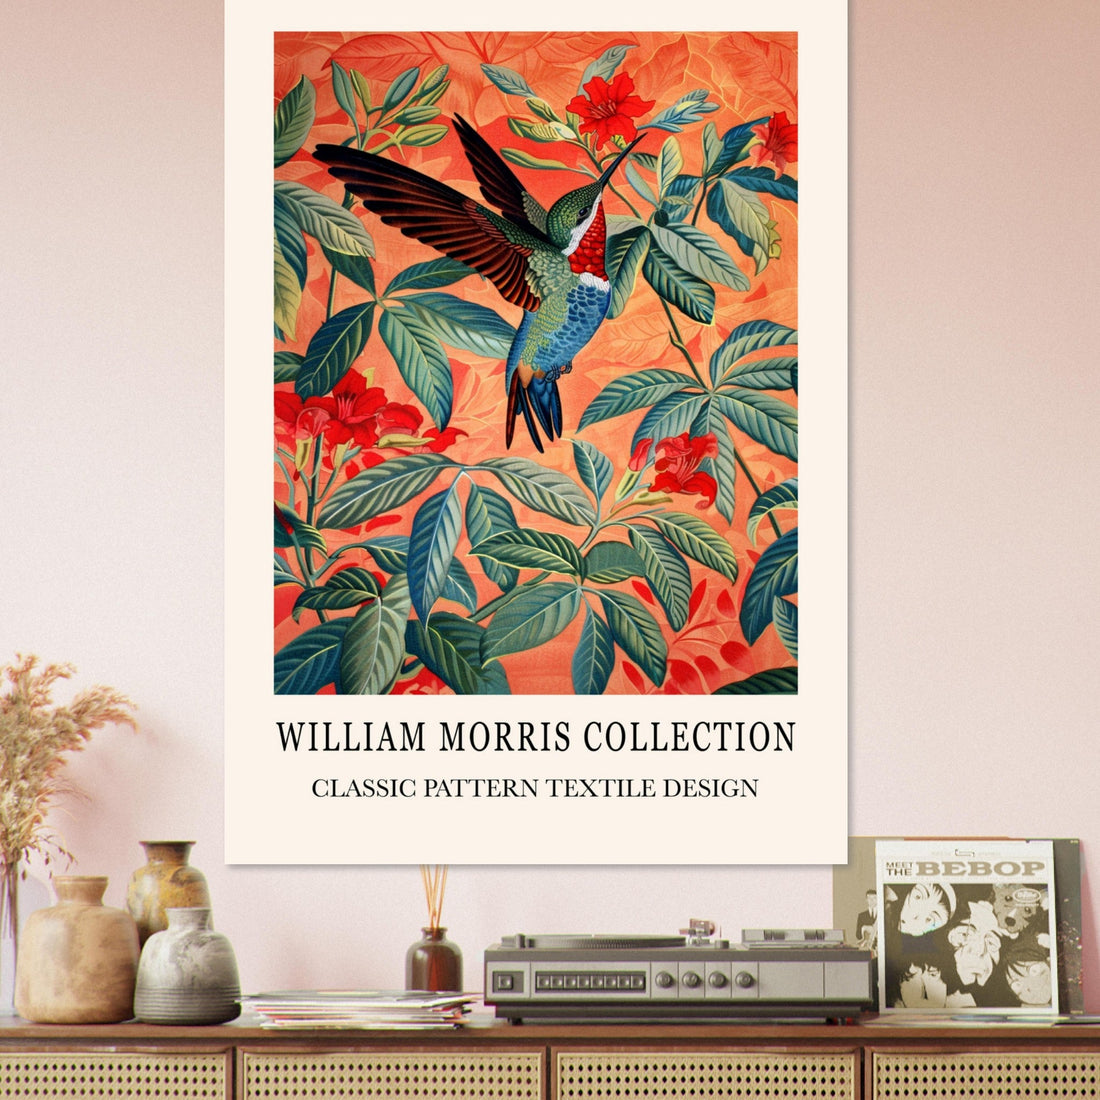 Humming Bird - William Morris, Hummingbird print, Inspired By William Morris, william morris, #illieeart